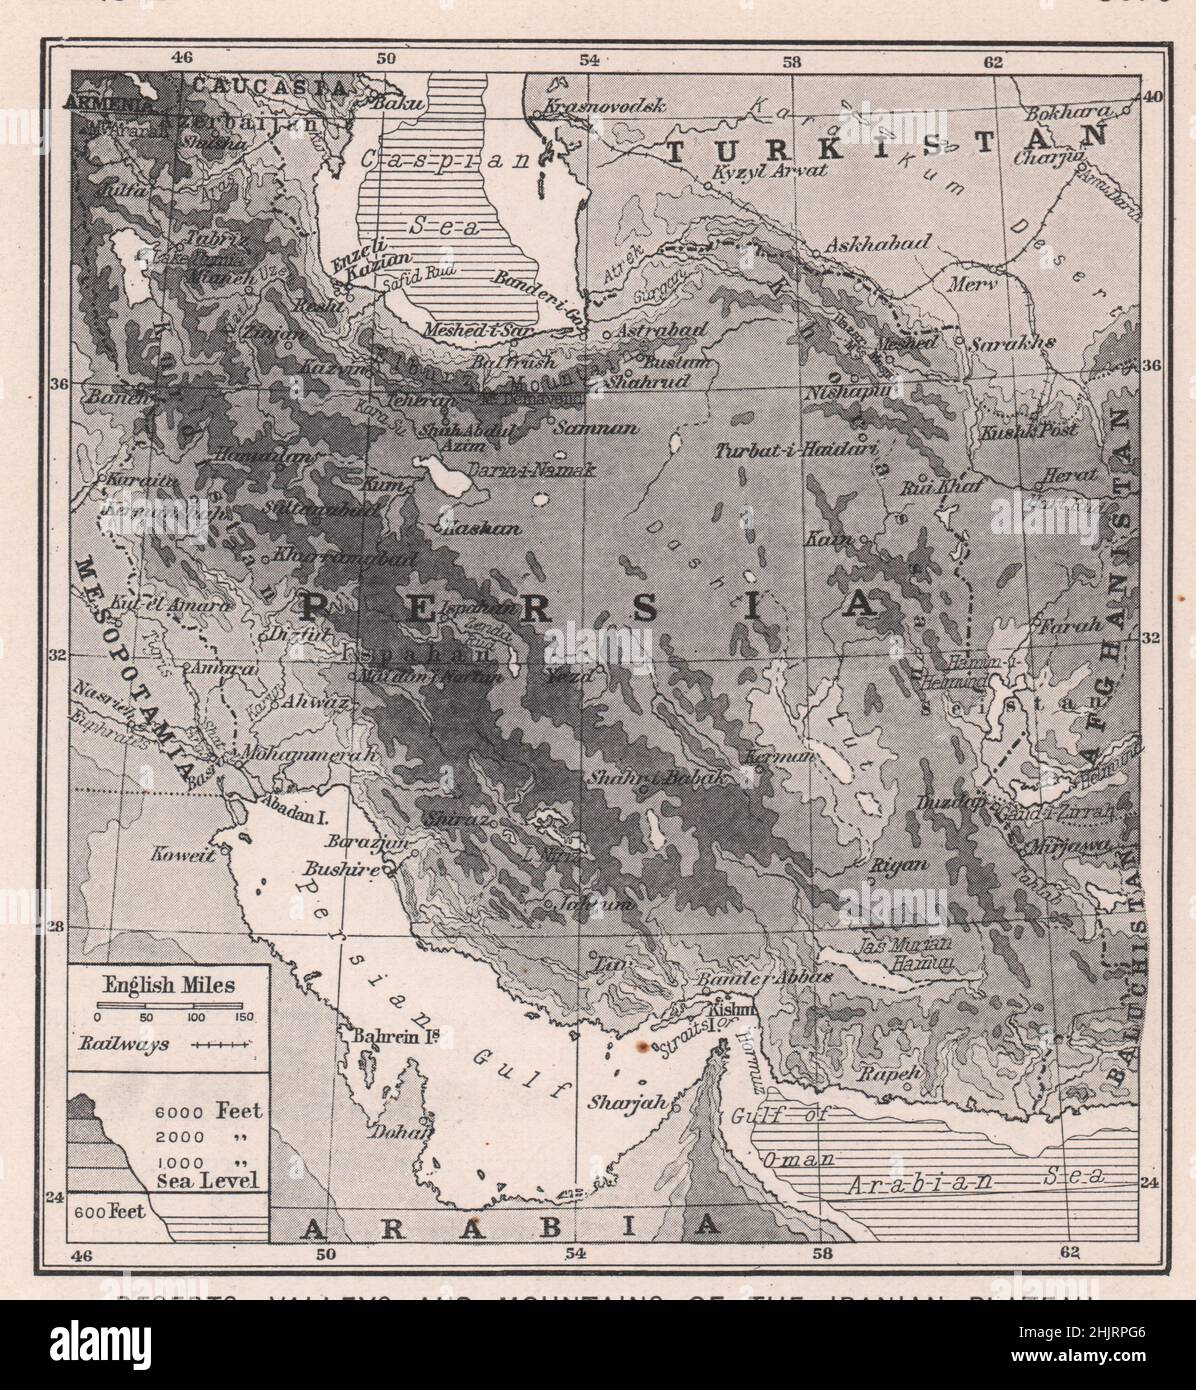 Desiertos, valles y montañas de la meseta iraní. Persia (1923 mapa) Foto de stock